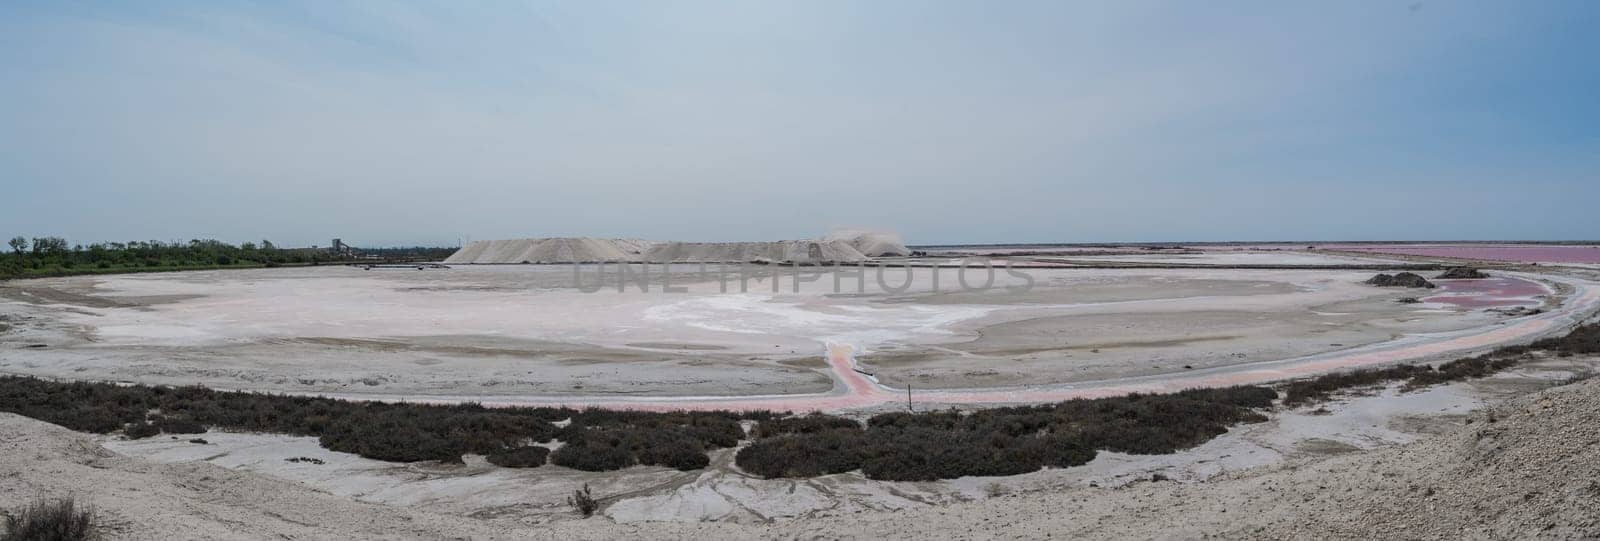 Pink Ponds In Man-made Salt Evaporation Pans In Camargue, Salin de Guiraud, France by FreeProd